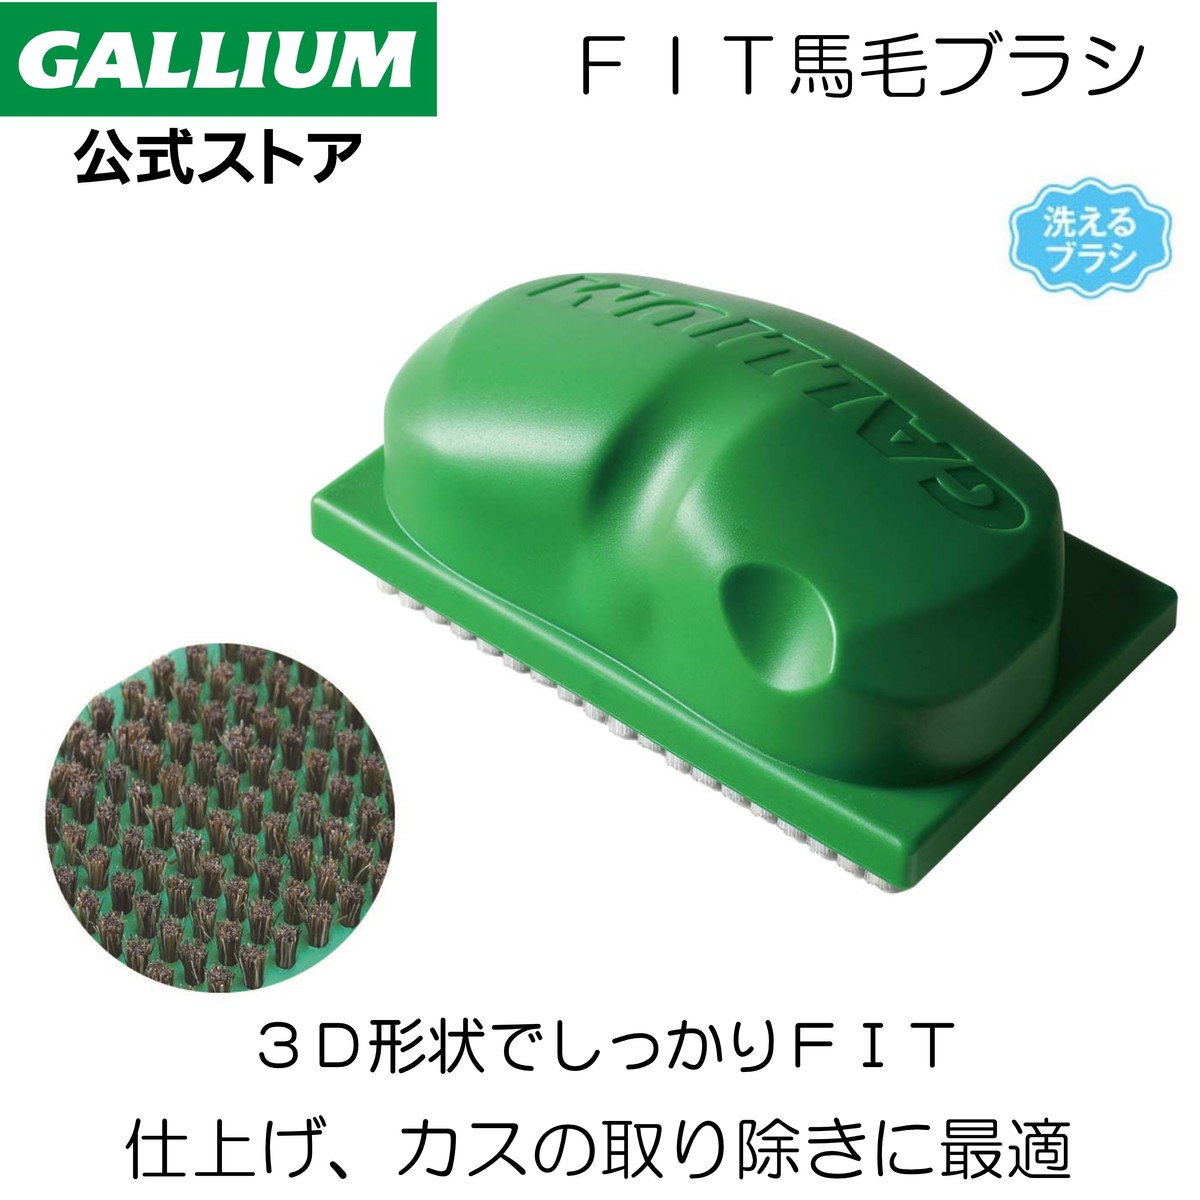 81%OFF!】 ガリウム GALLIUM ロトブラシ ハンドル SP3119